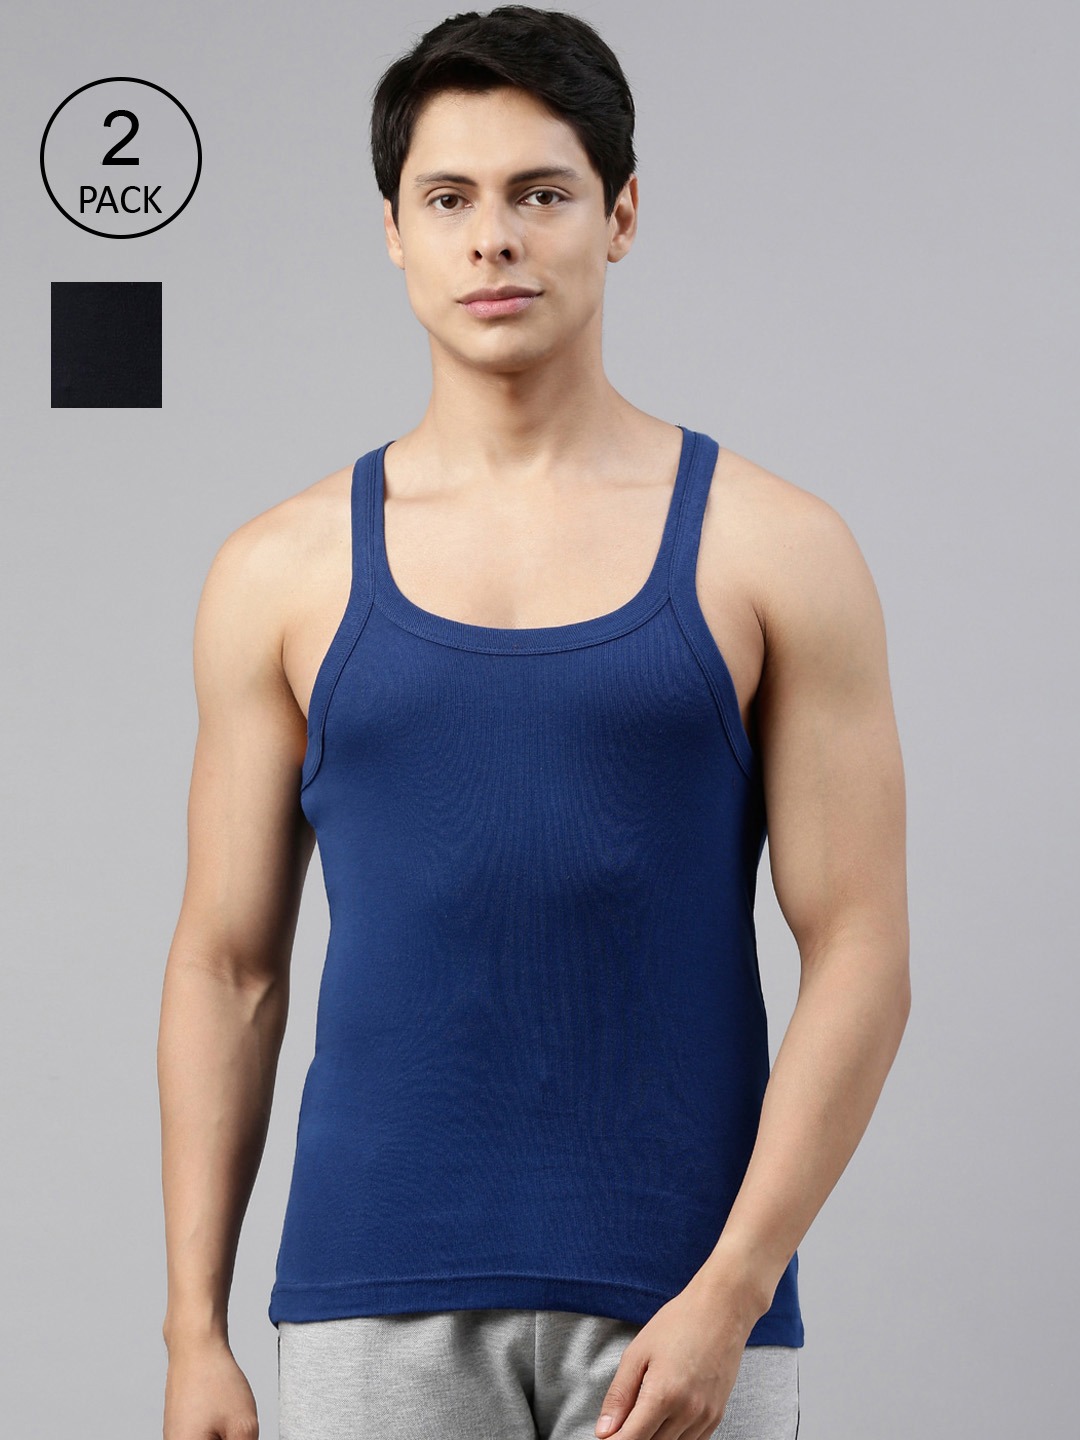 Clothing Innerwear Vests | DIXCY SCOTT Men Pack Of 2 Blue Solid Cotton Innerwear Gym Vest - KY97829